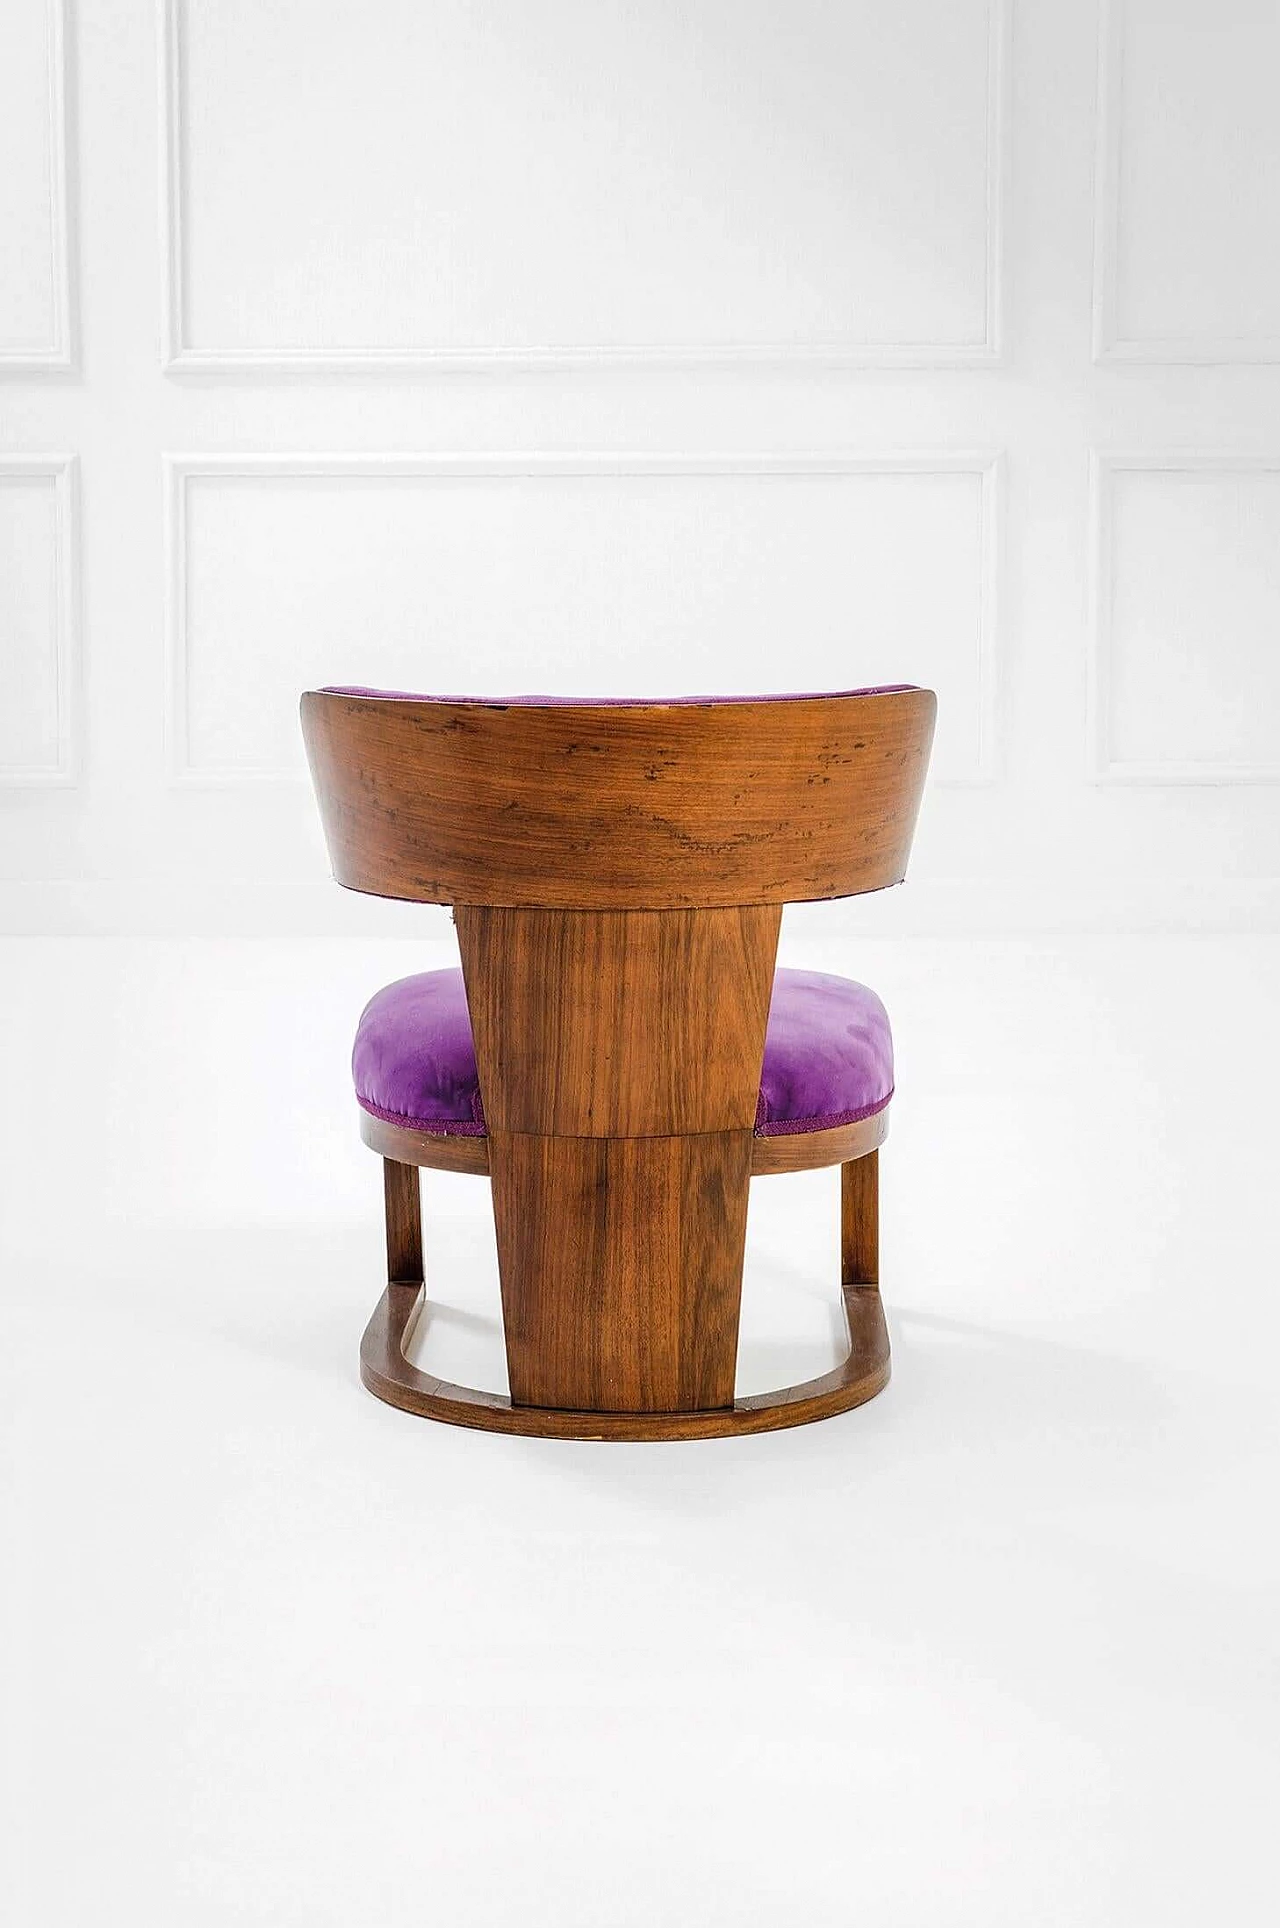 Ernesto Lapadula's armchair in wood and purple velvet, 1930s 1466320